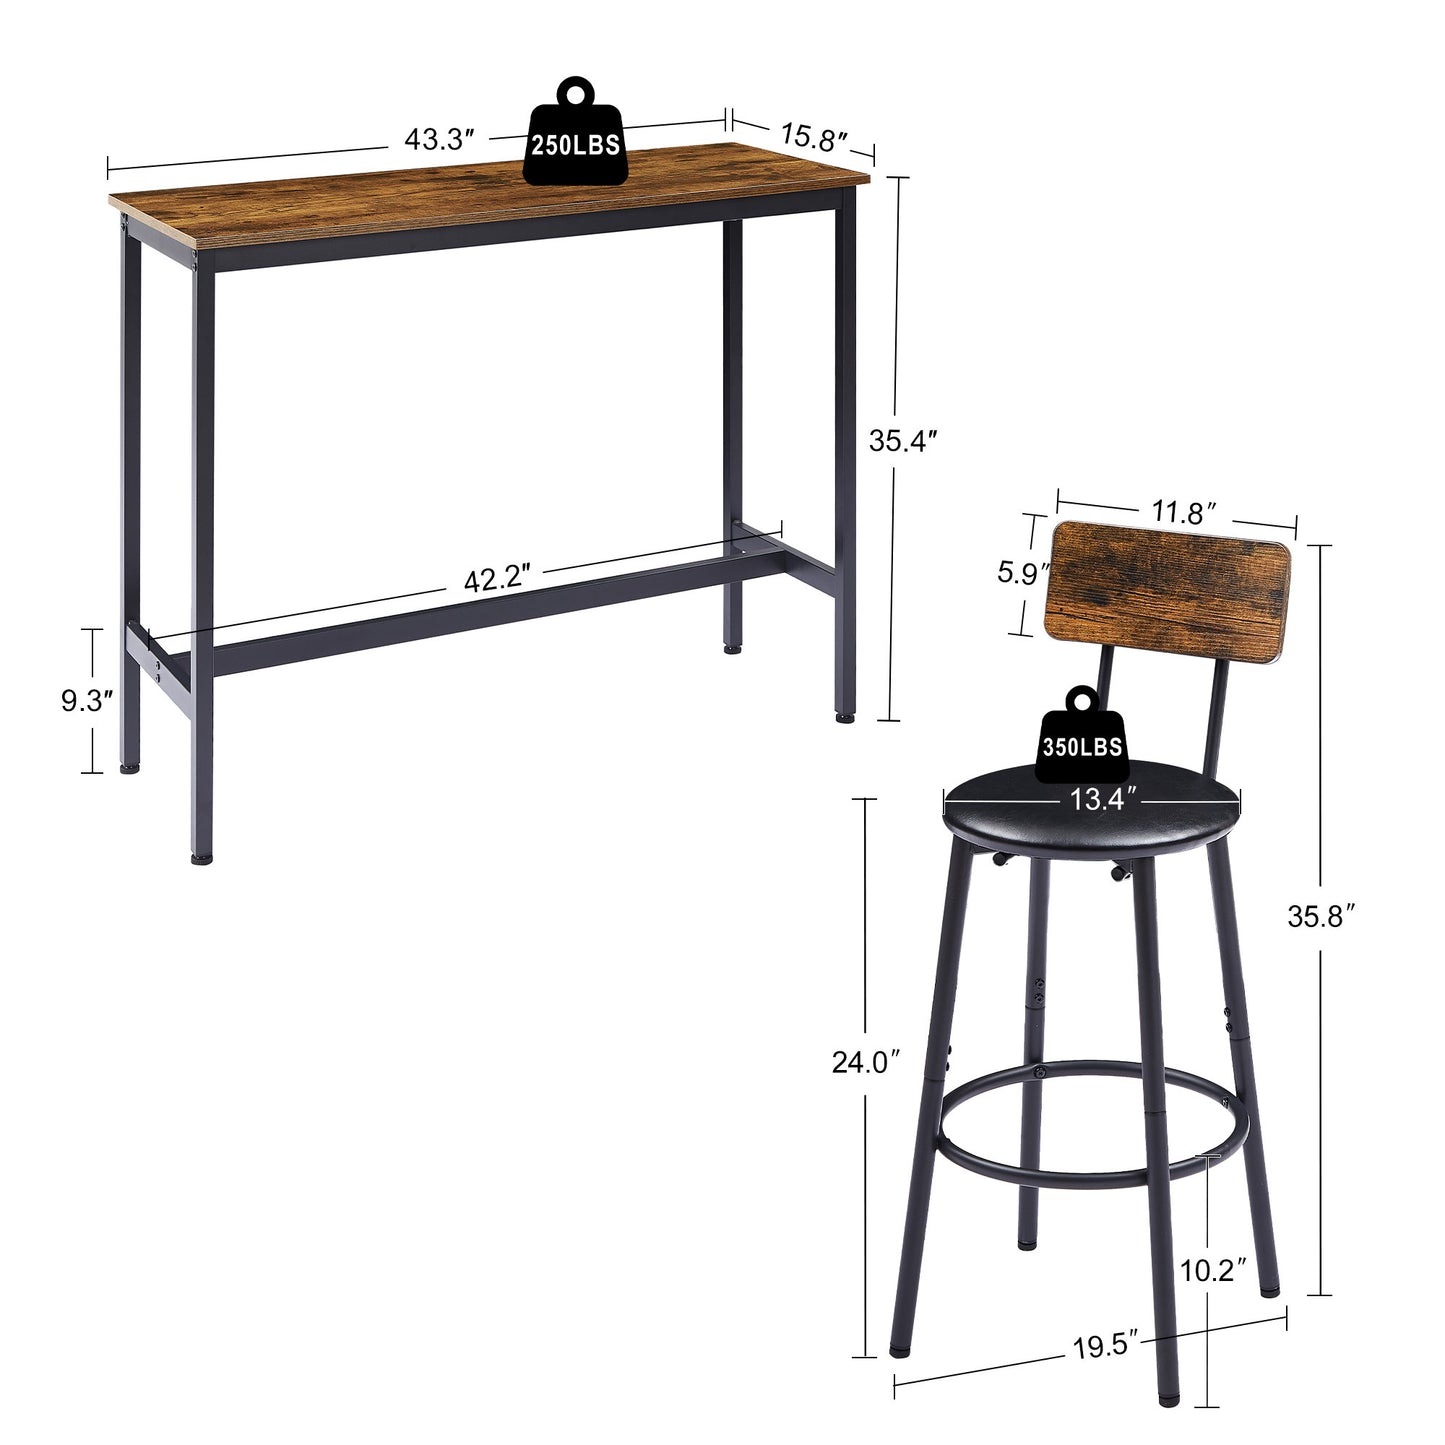 Tiani Bar Table Set with 2 Bar stools